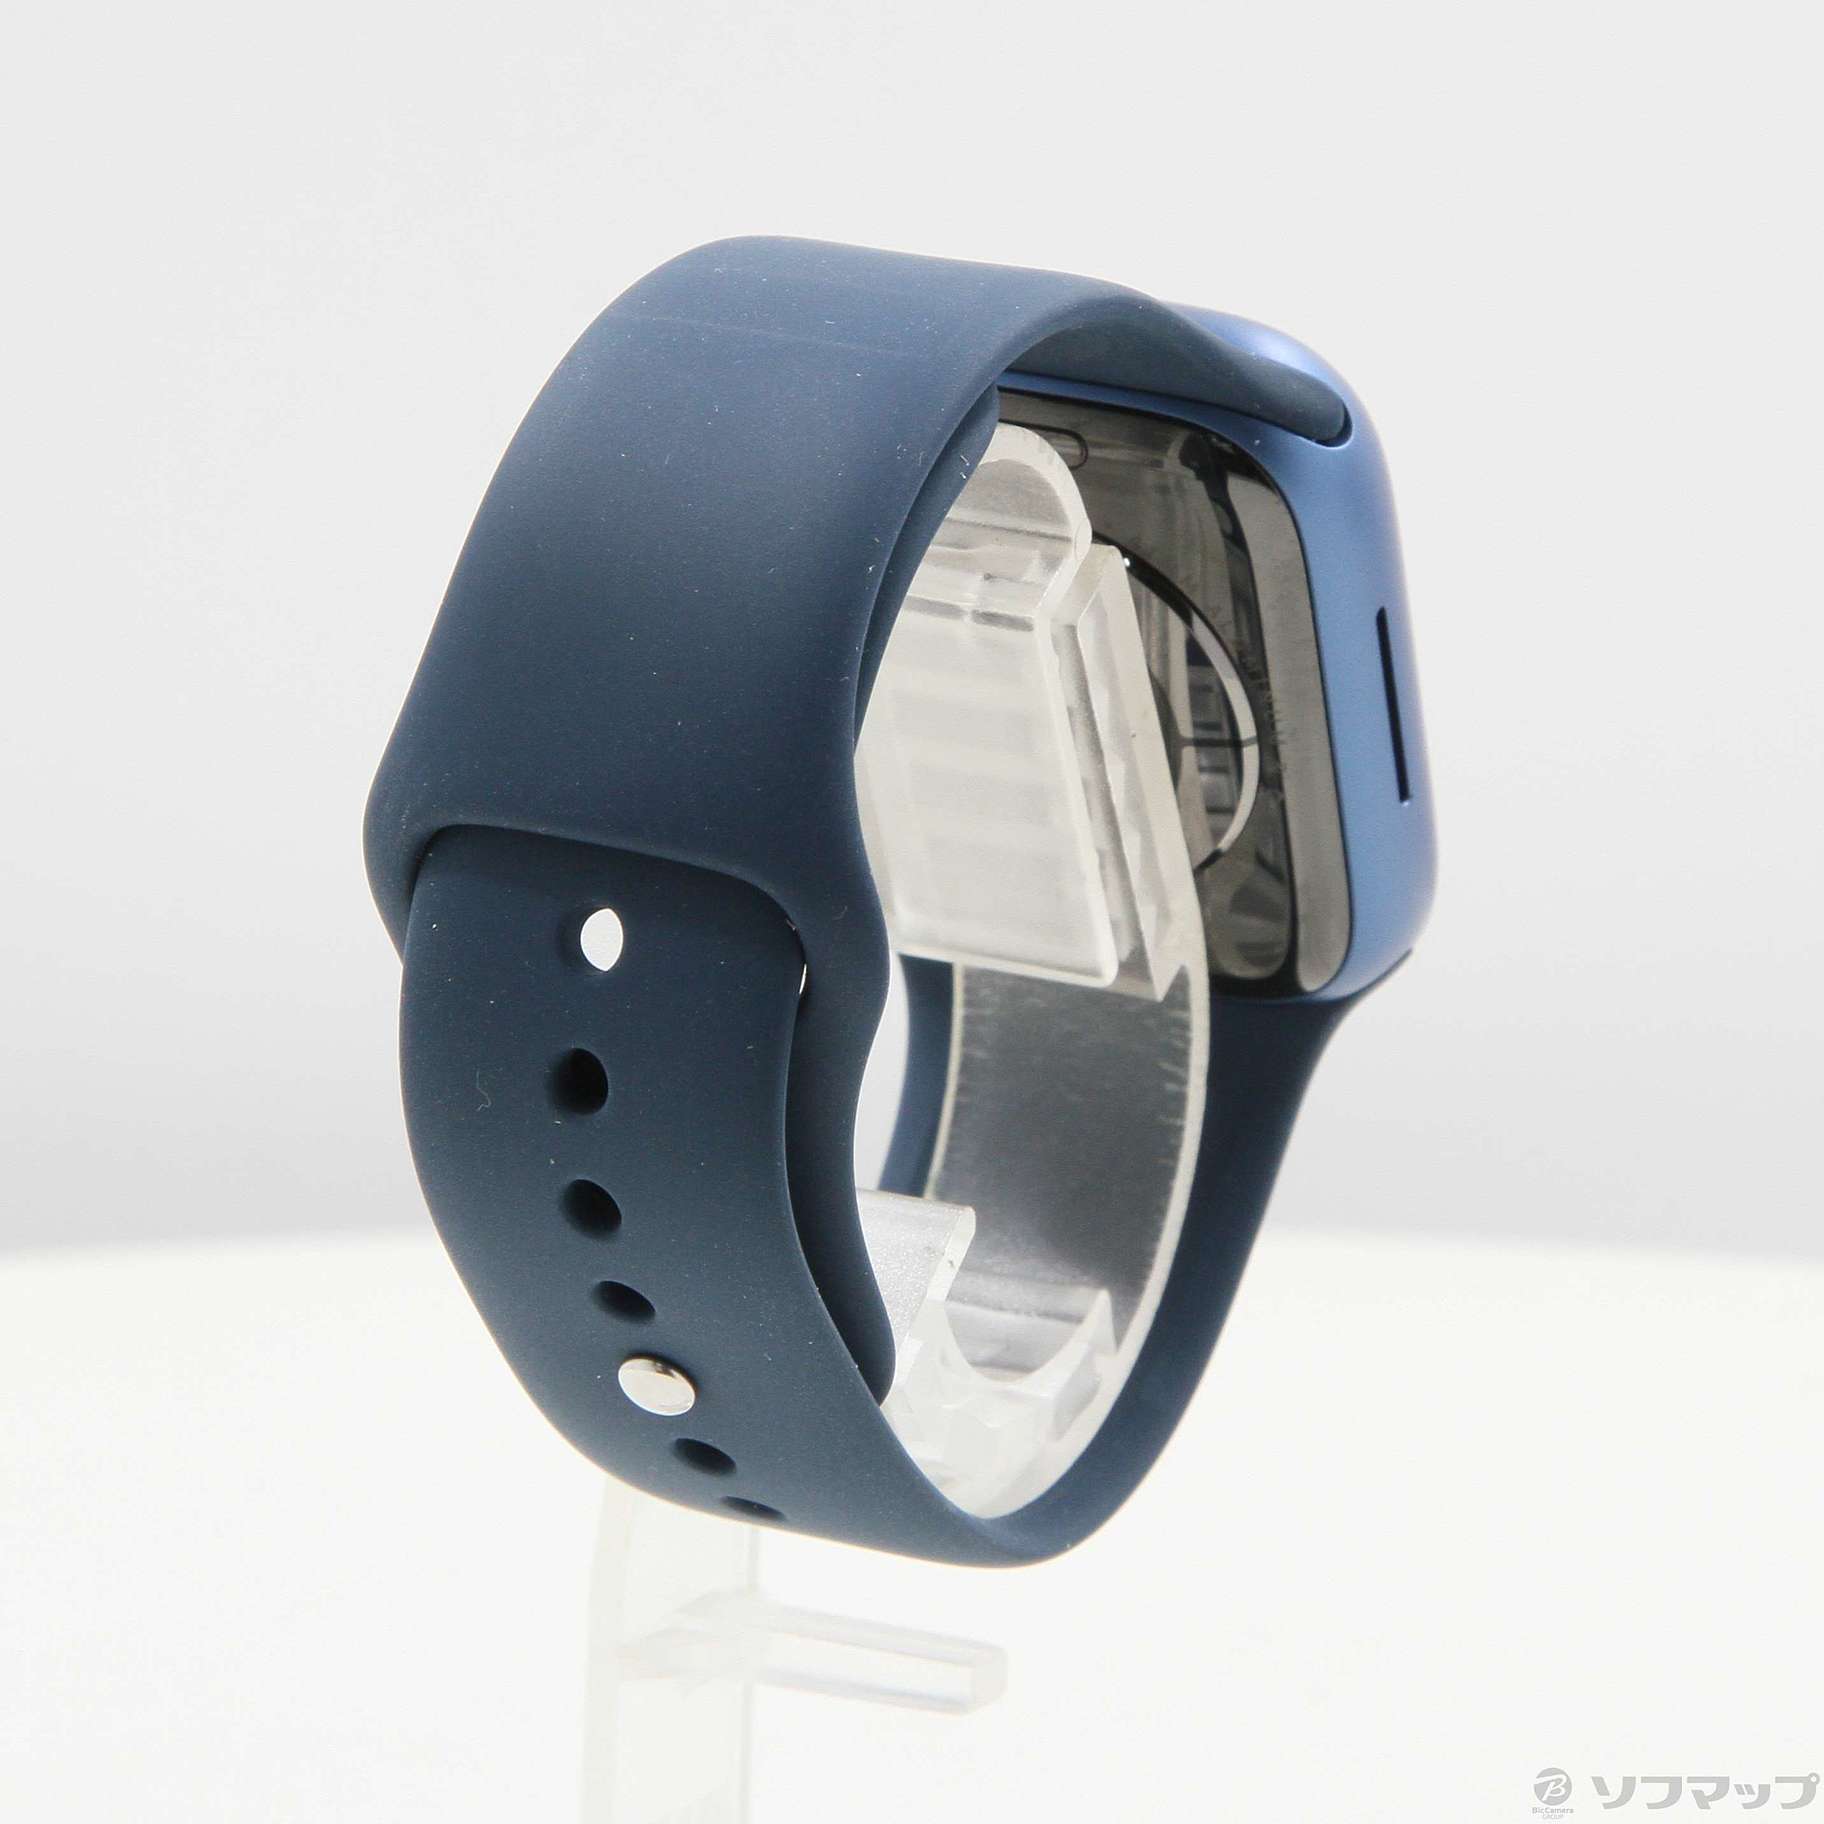 Apple(アップル) Apple Watch GPS Series 41mm グリーンアルミニウム